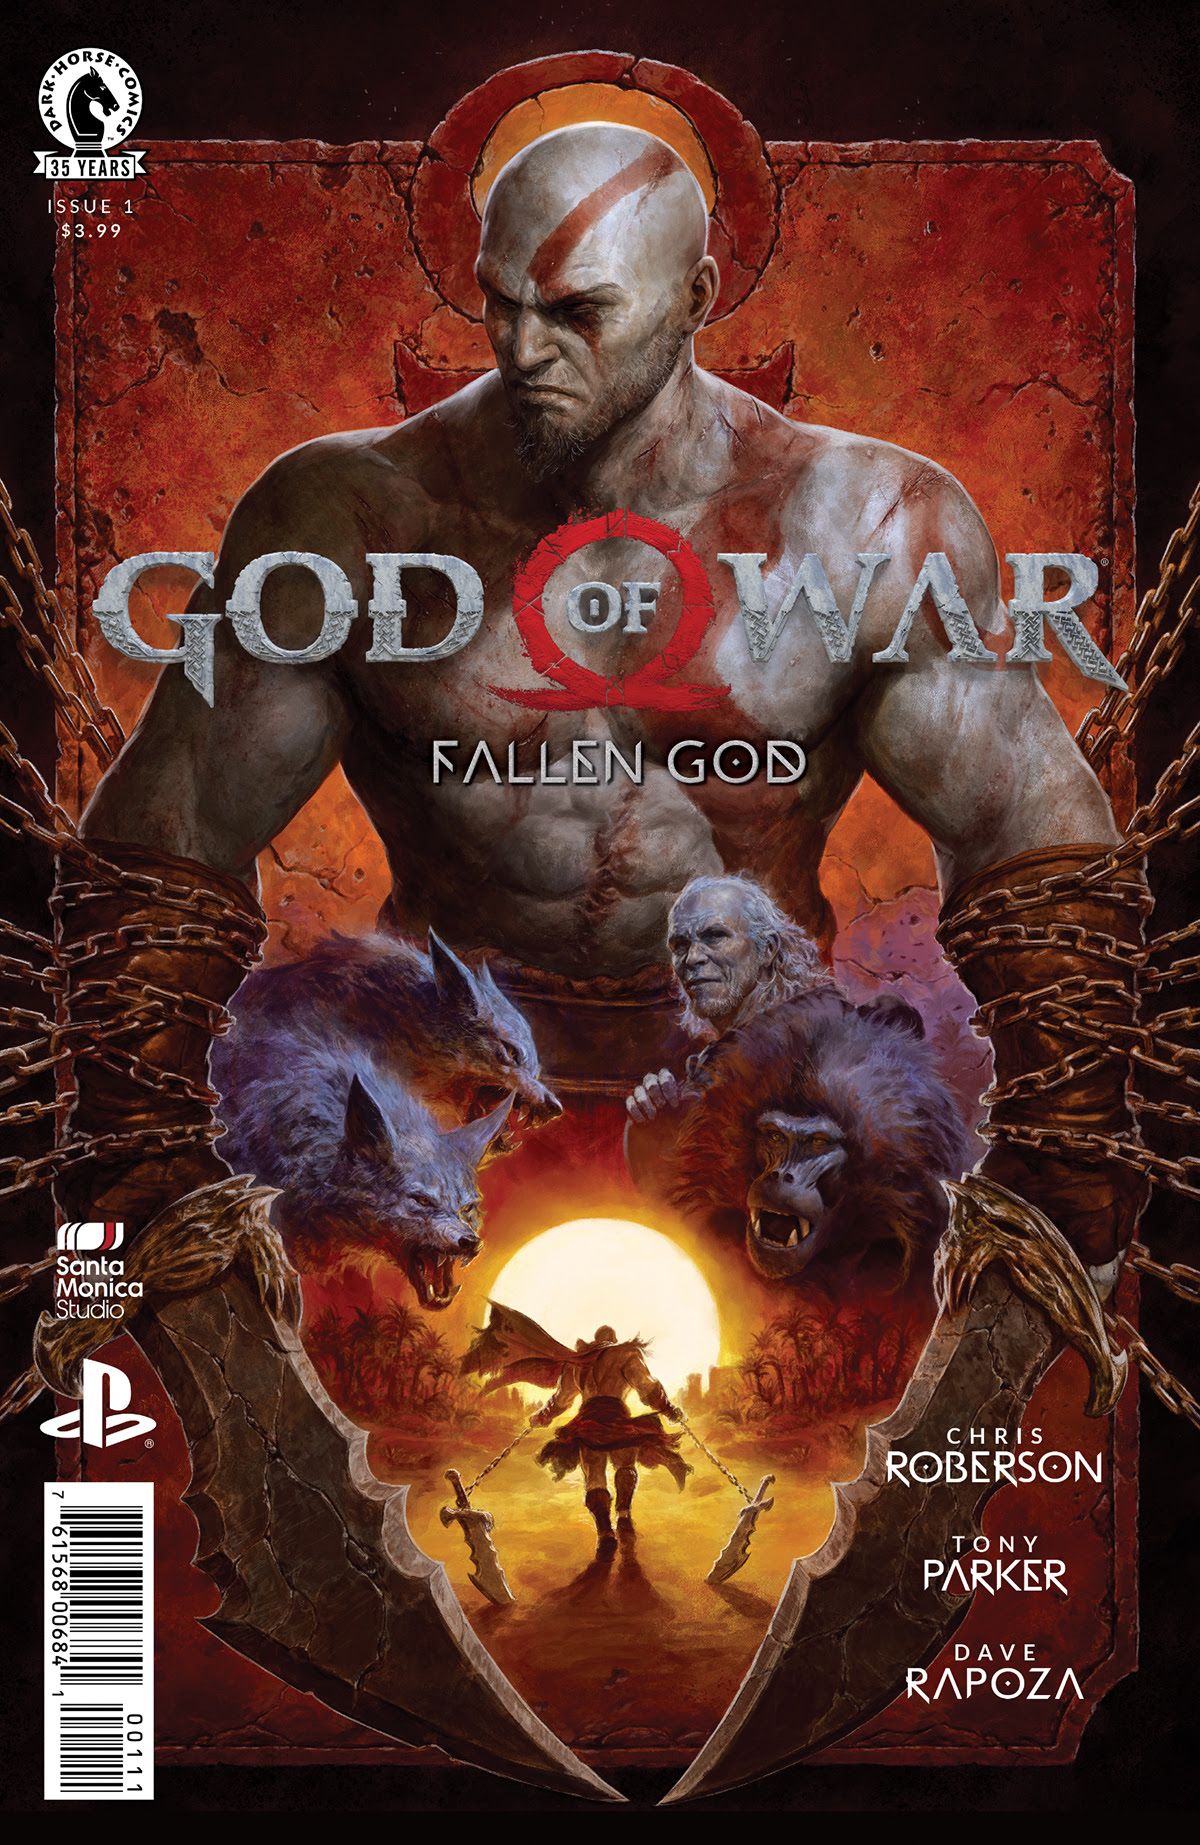 Delayed God of War Series ‘Fallen God’ Finally Gets a Release Date